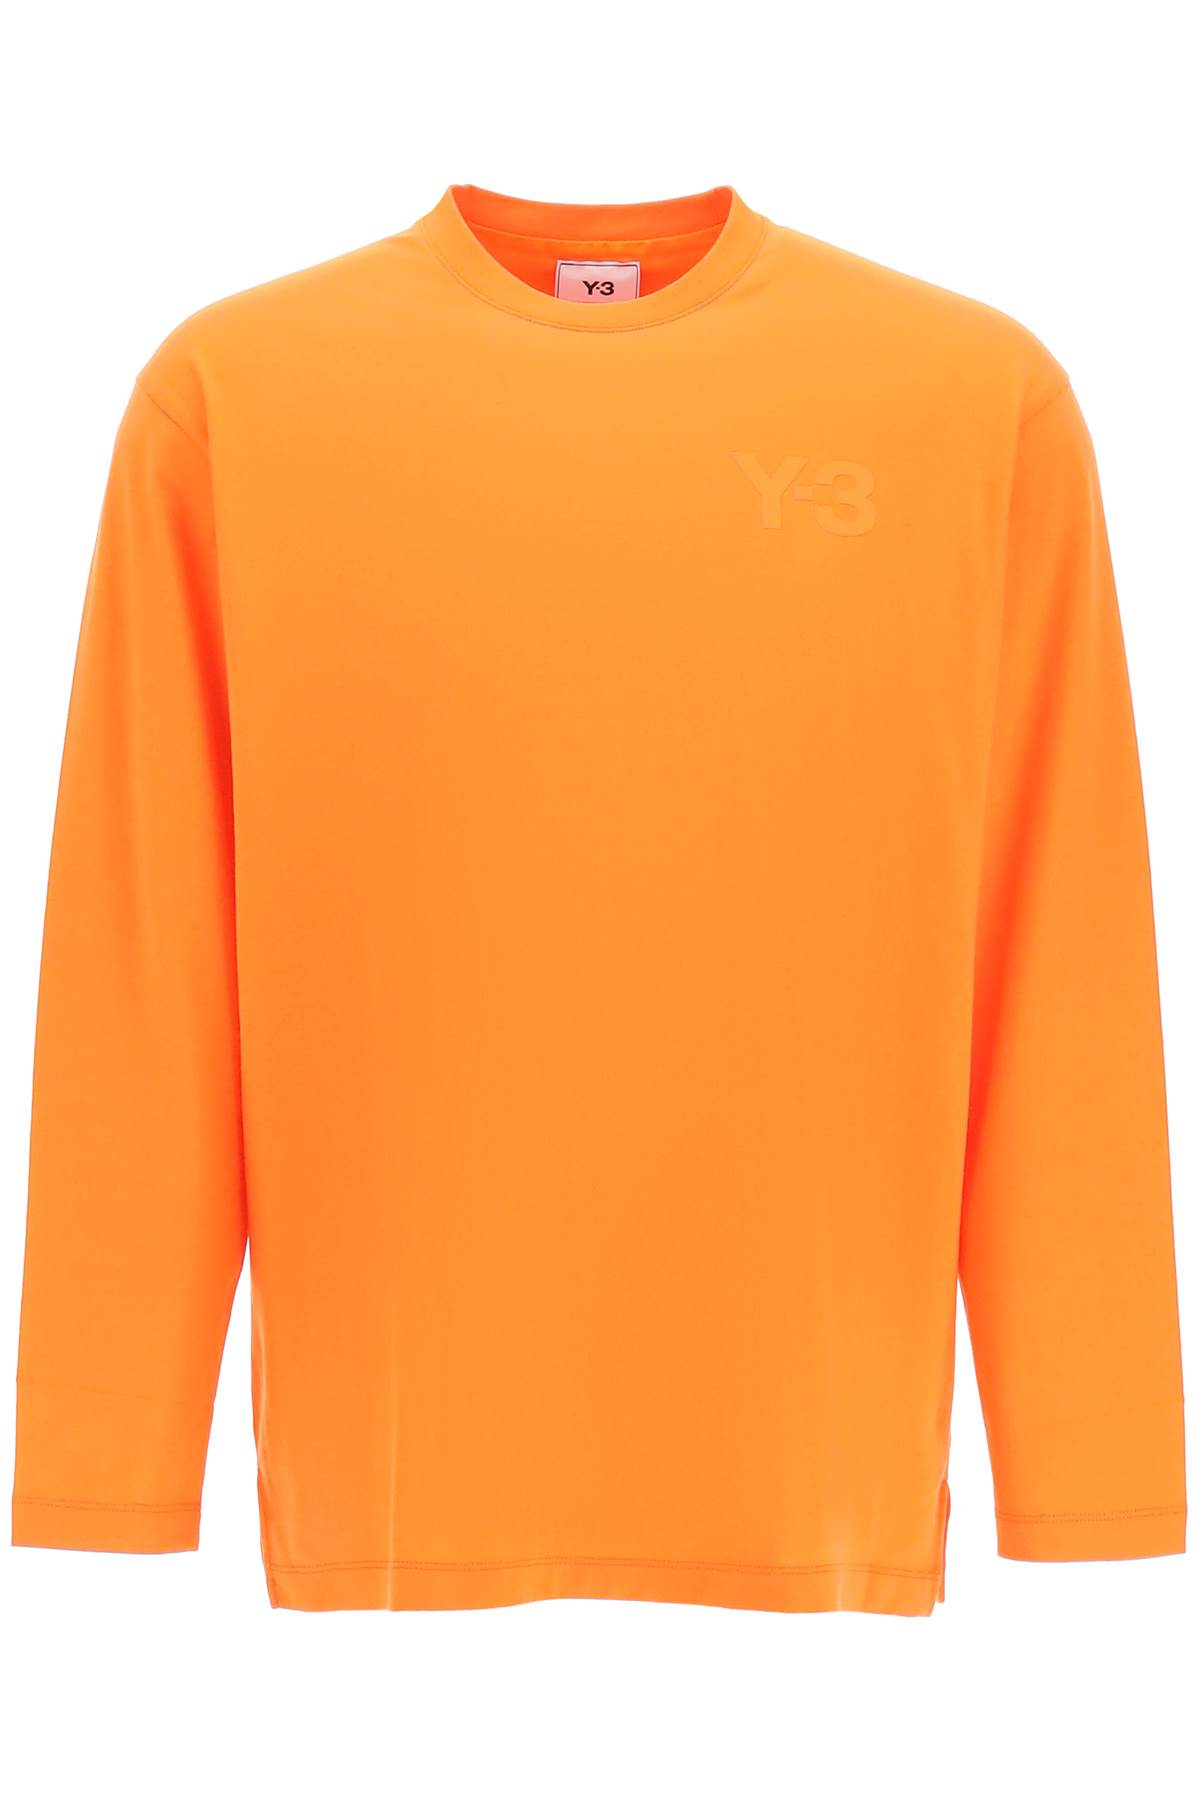 Y-3 Logo Print Long Sleeve T-shirt